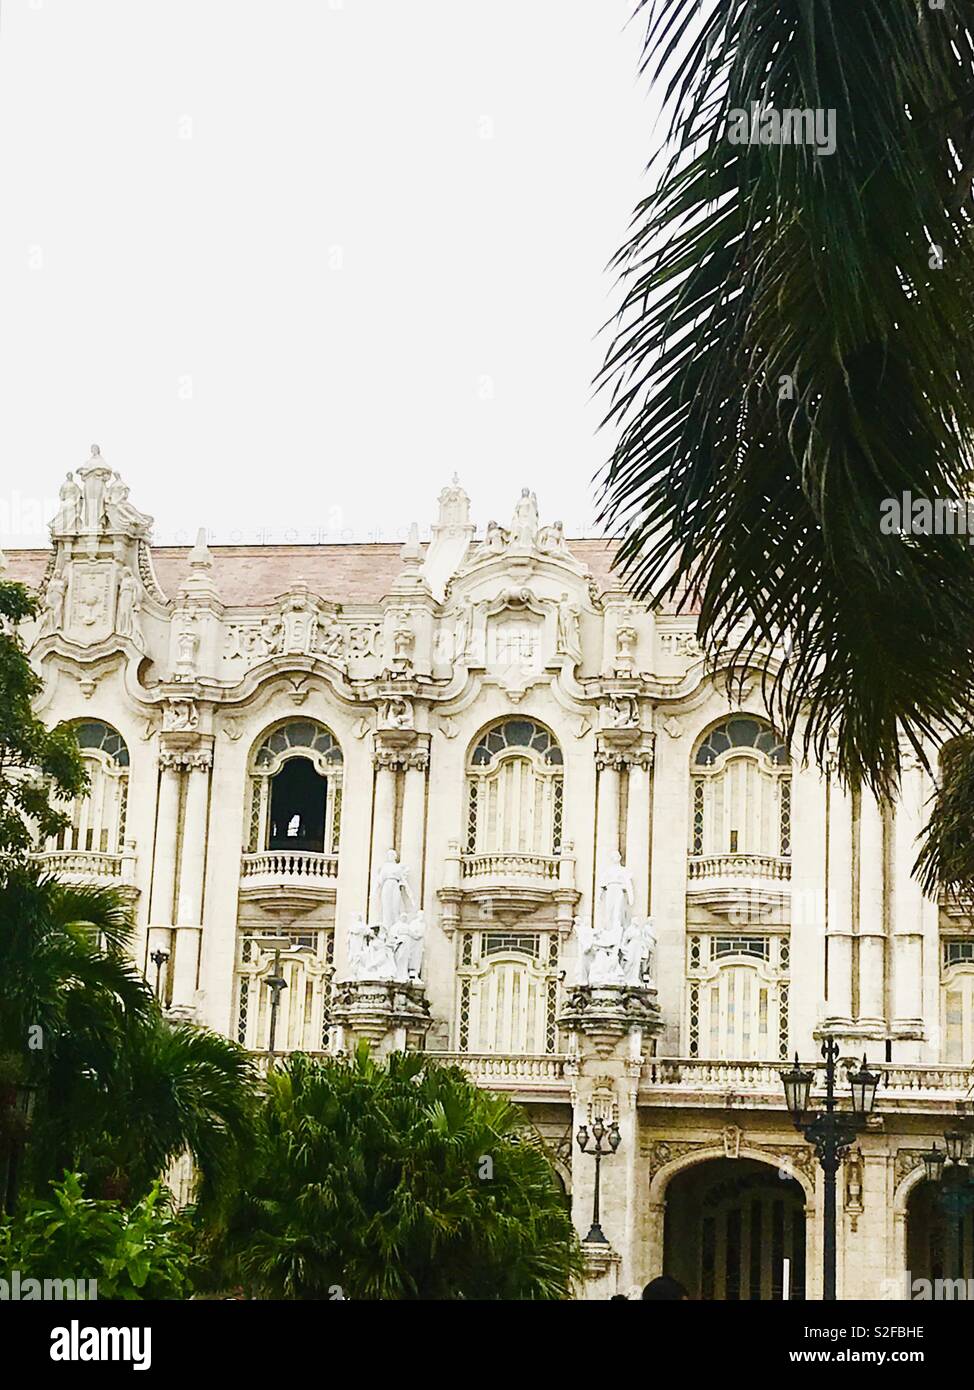 The Great Theatre of Havana, Gran Teatro de La Habana, hosting the Cuban National Ballet at this stunning Opera House. Stock Photo